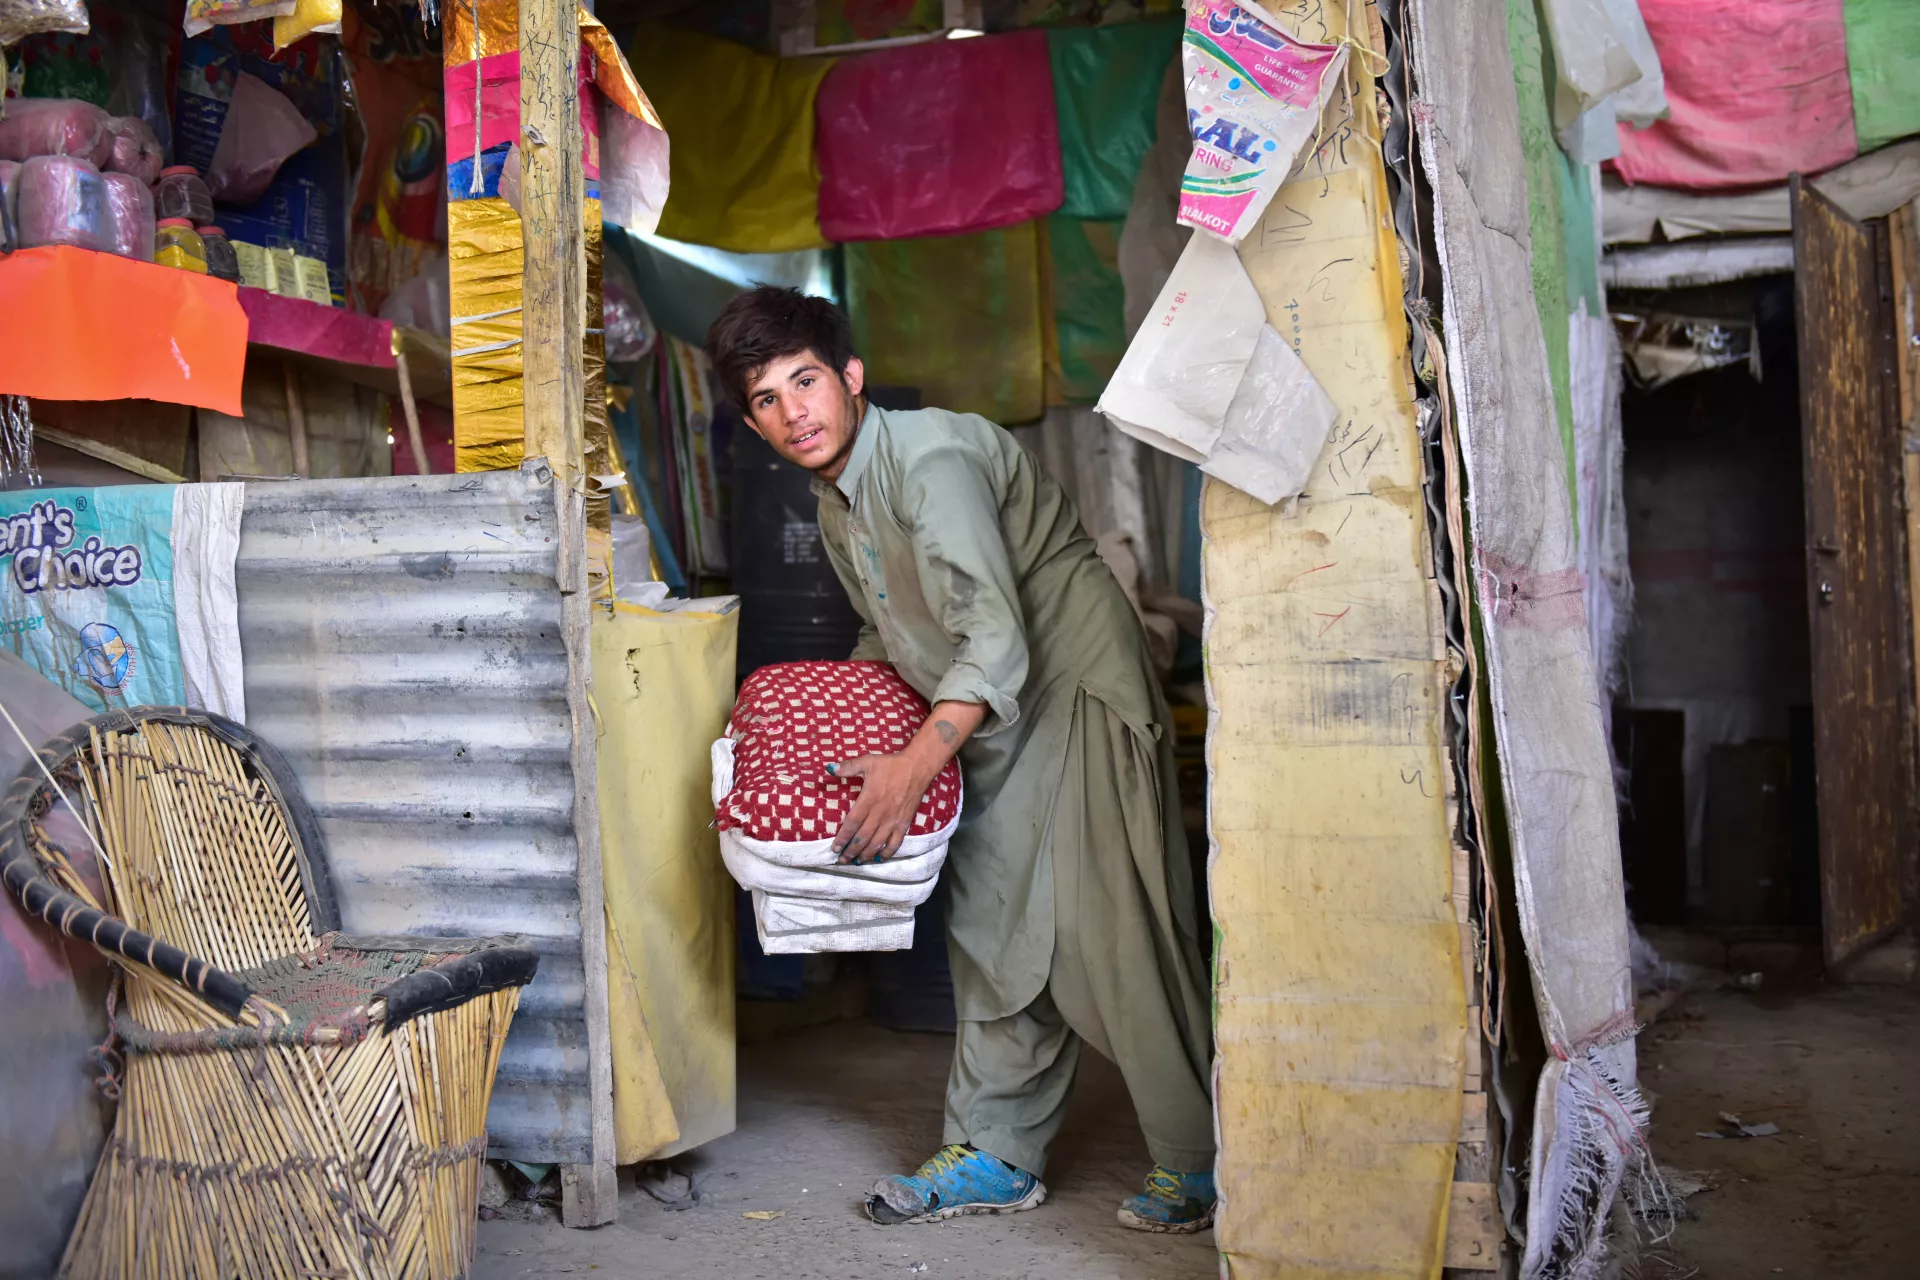 A boy lifts a crate at a market, Pakistan